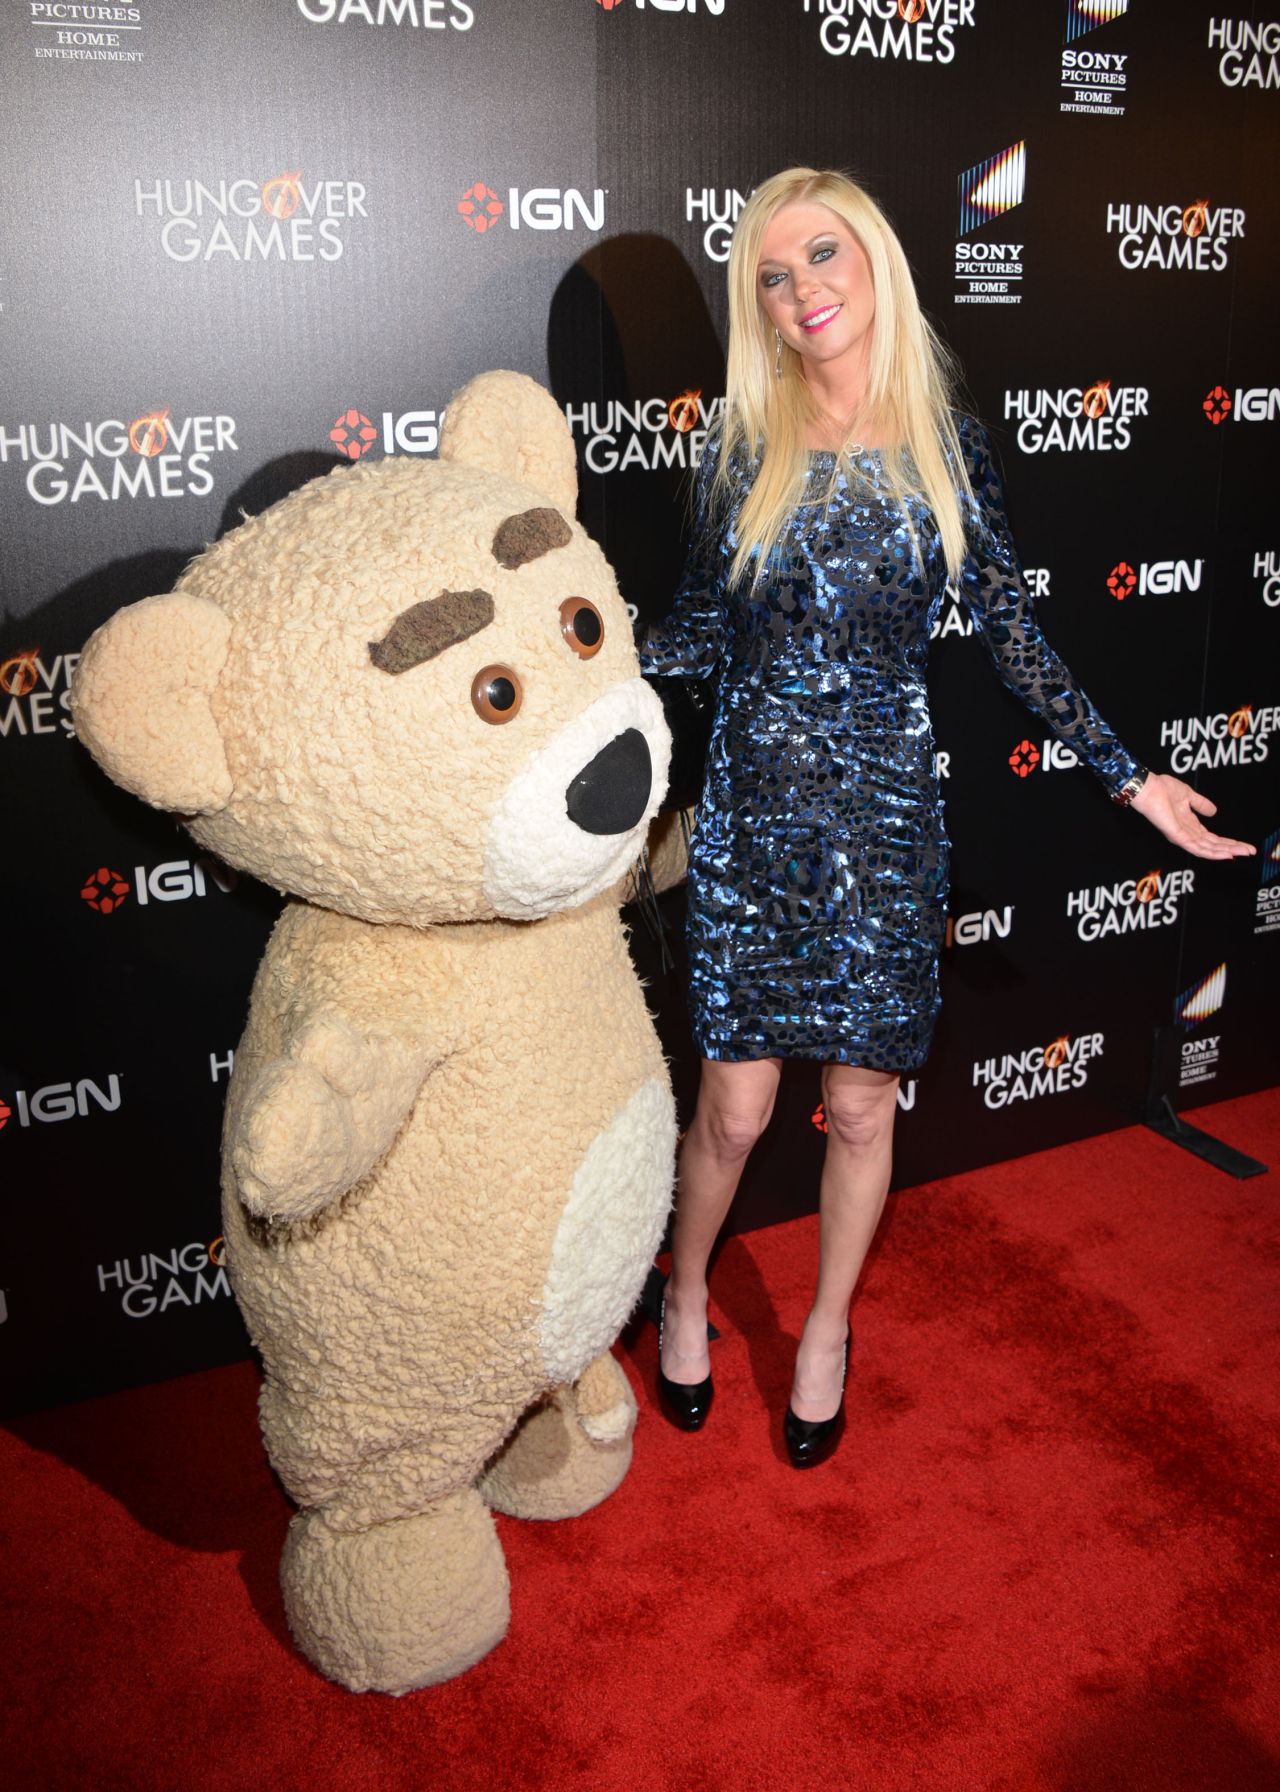 Tara Reid Red Carpet Photos - Hungover Games Premiere, Feb. 2014